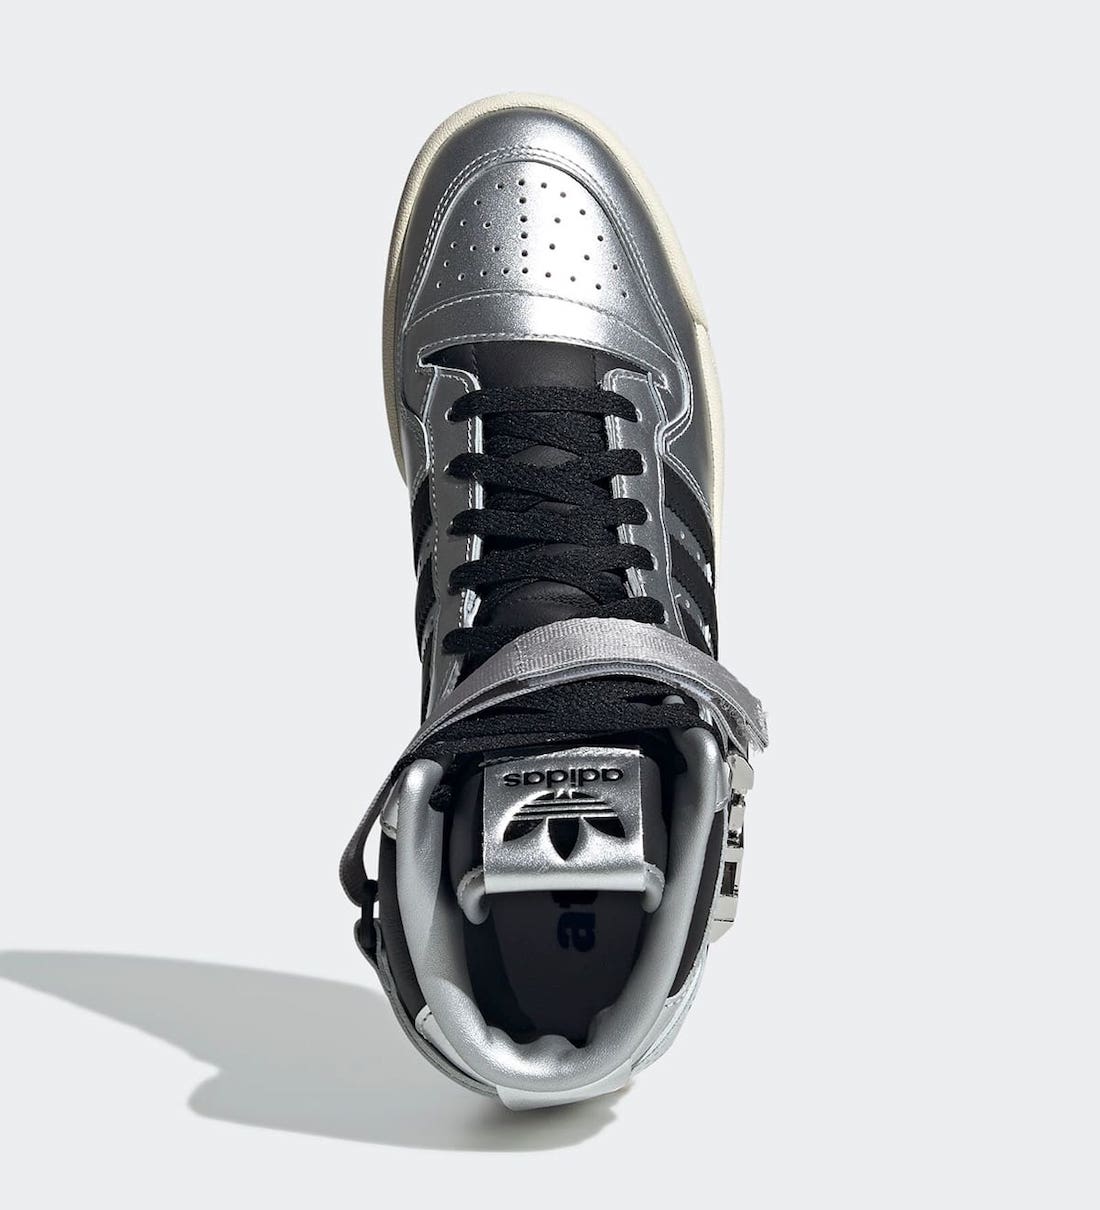 atmos adidas born fitfoam sandals kids black dress shoesgh GV6713 Release Date